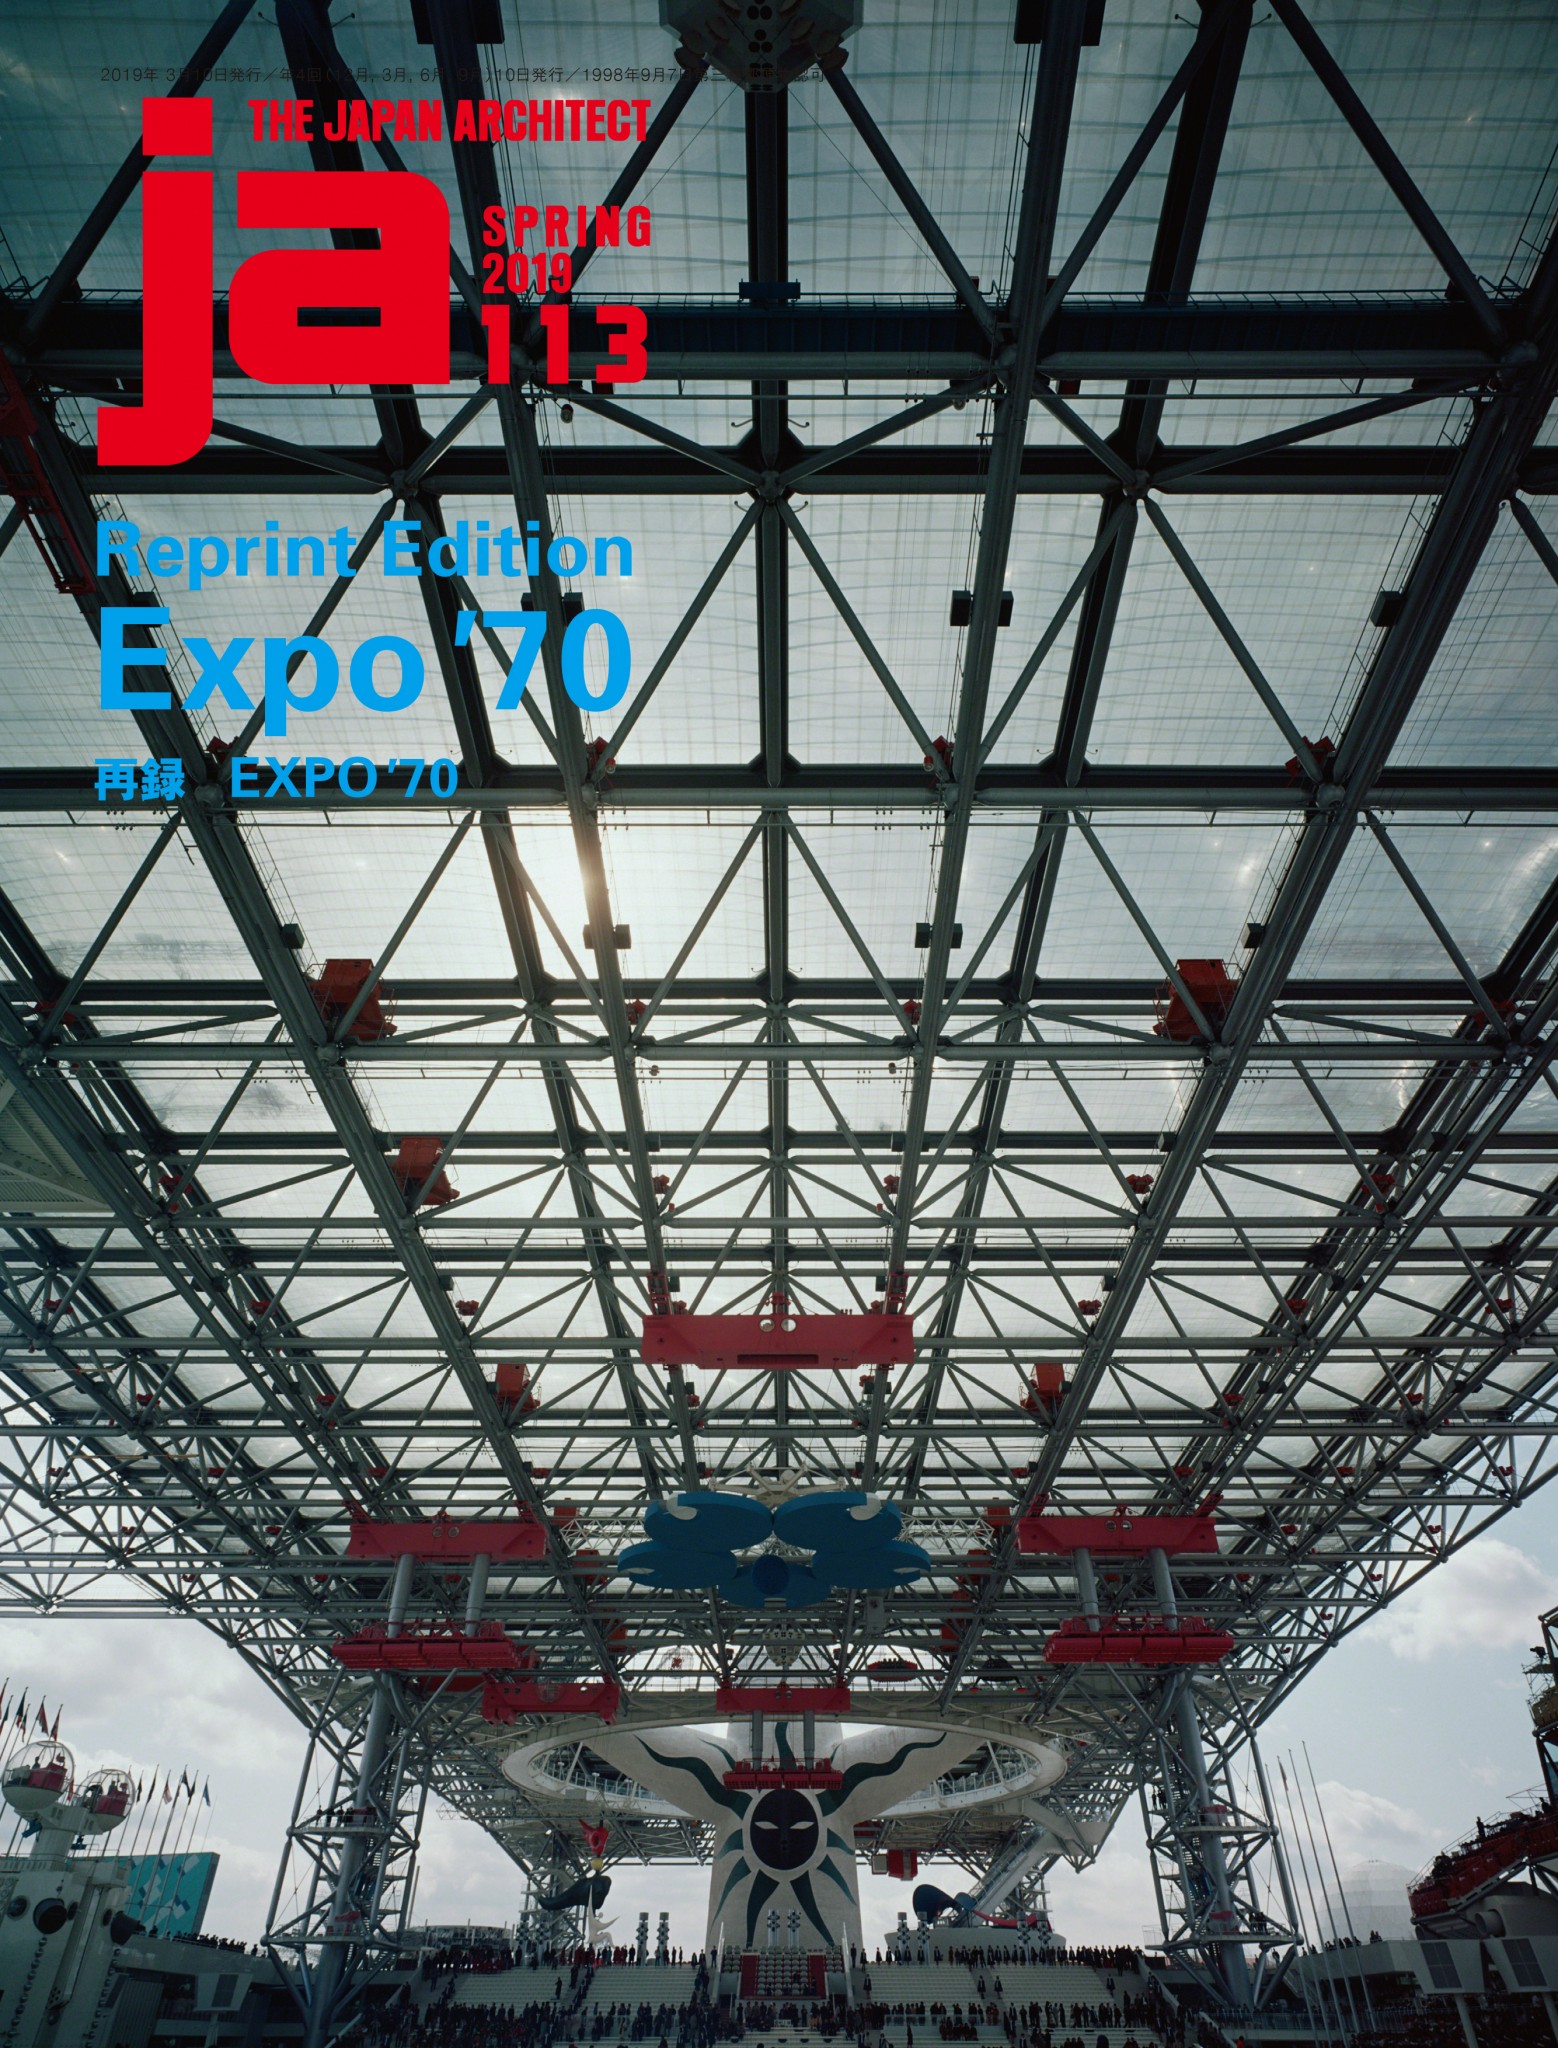 Ja 113 Spring 19 Reprint Edition Expo 70 再録 Expo 70 Japan Architect 新建築 Online 株式会社新建築社